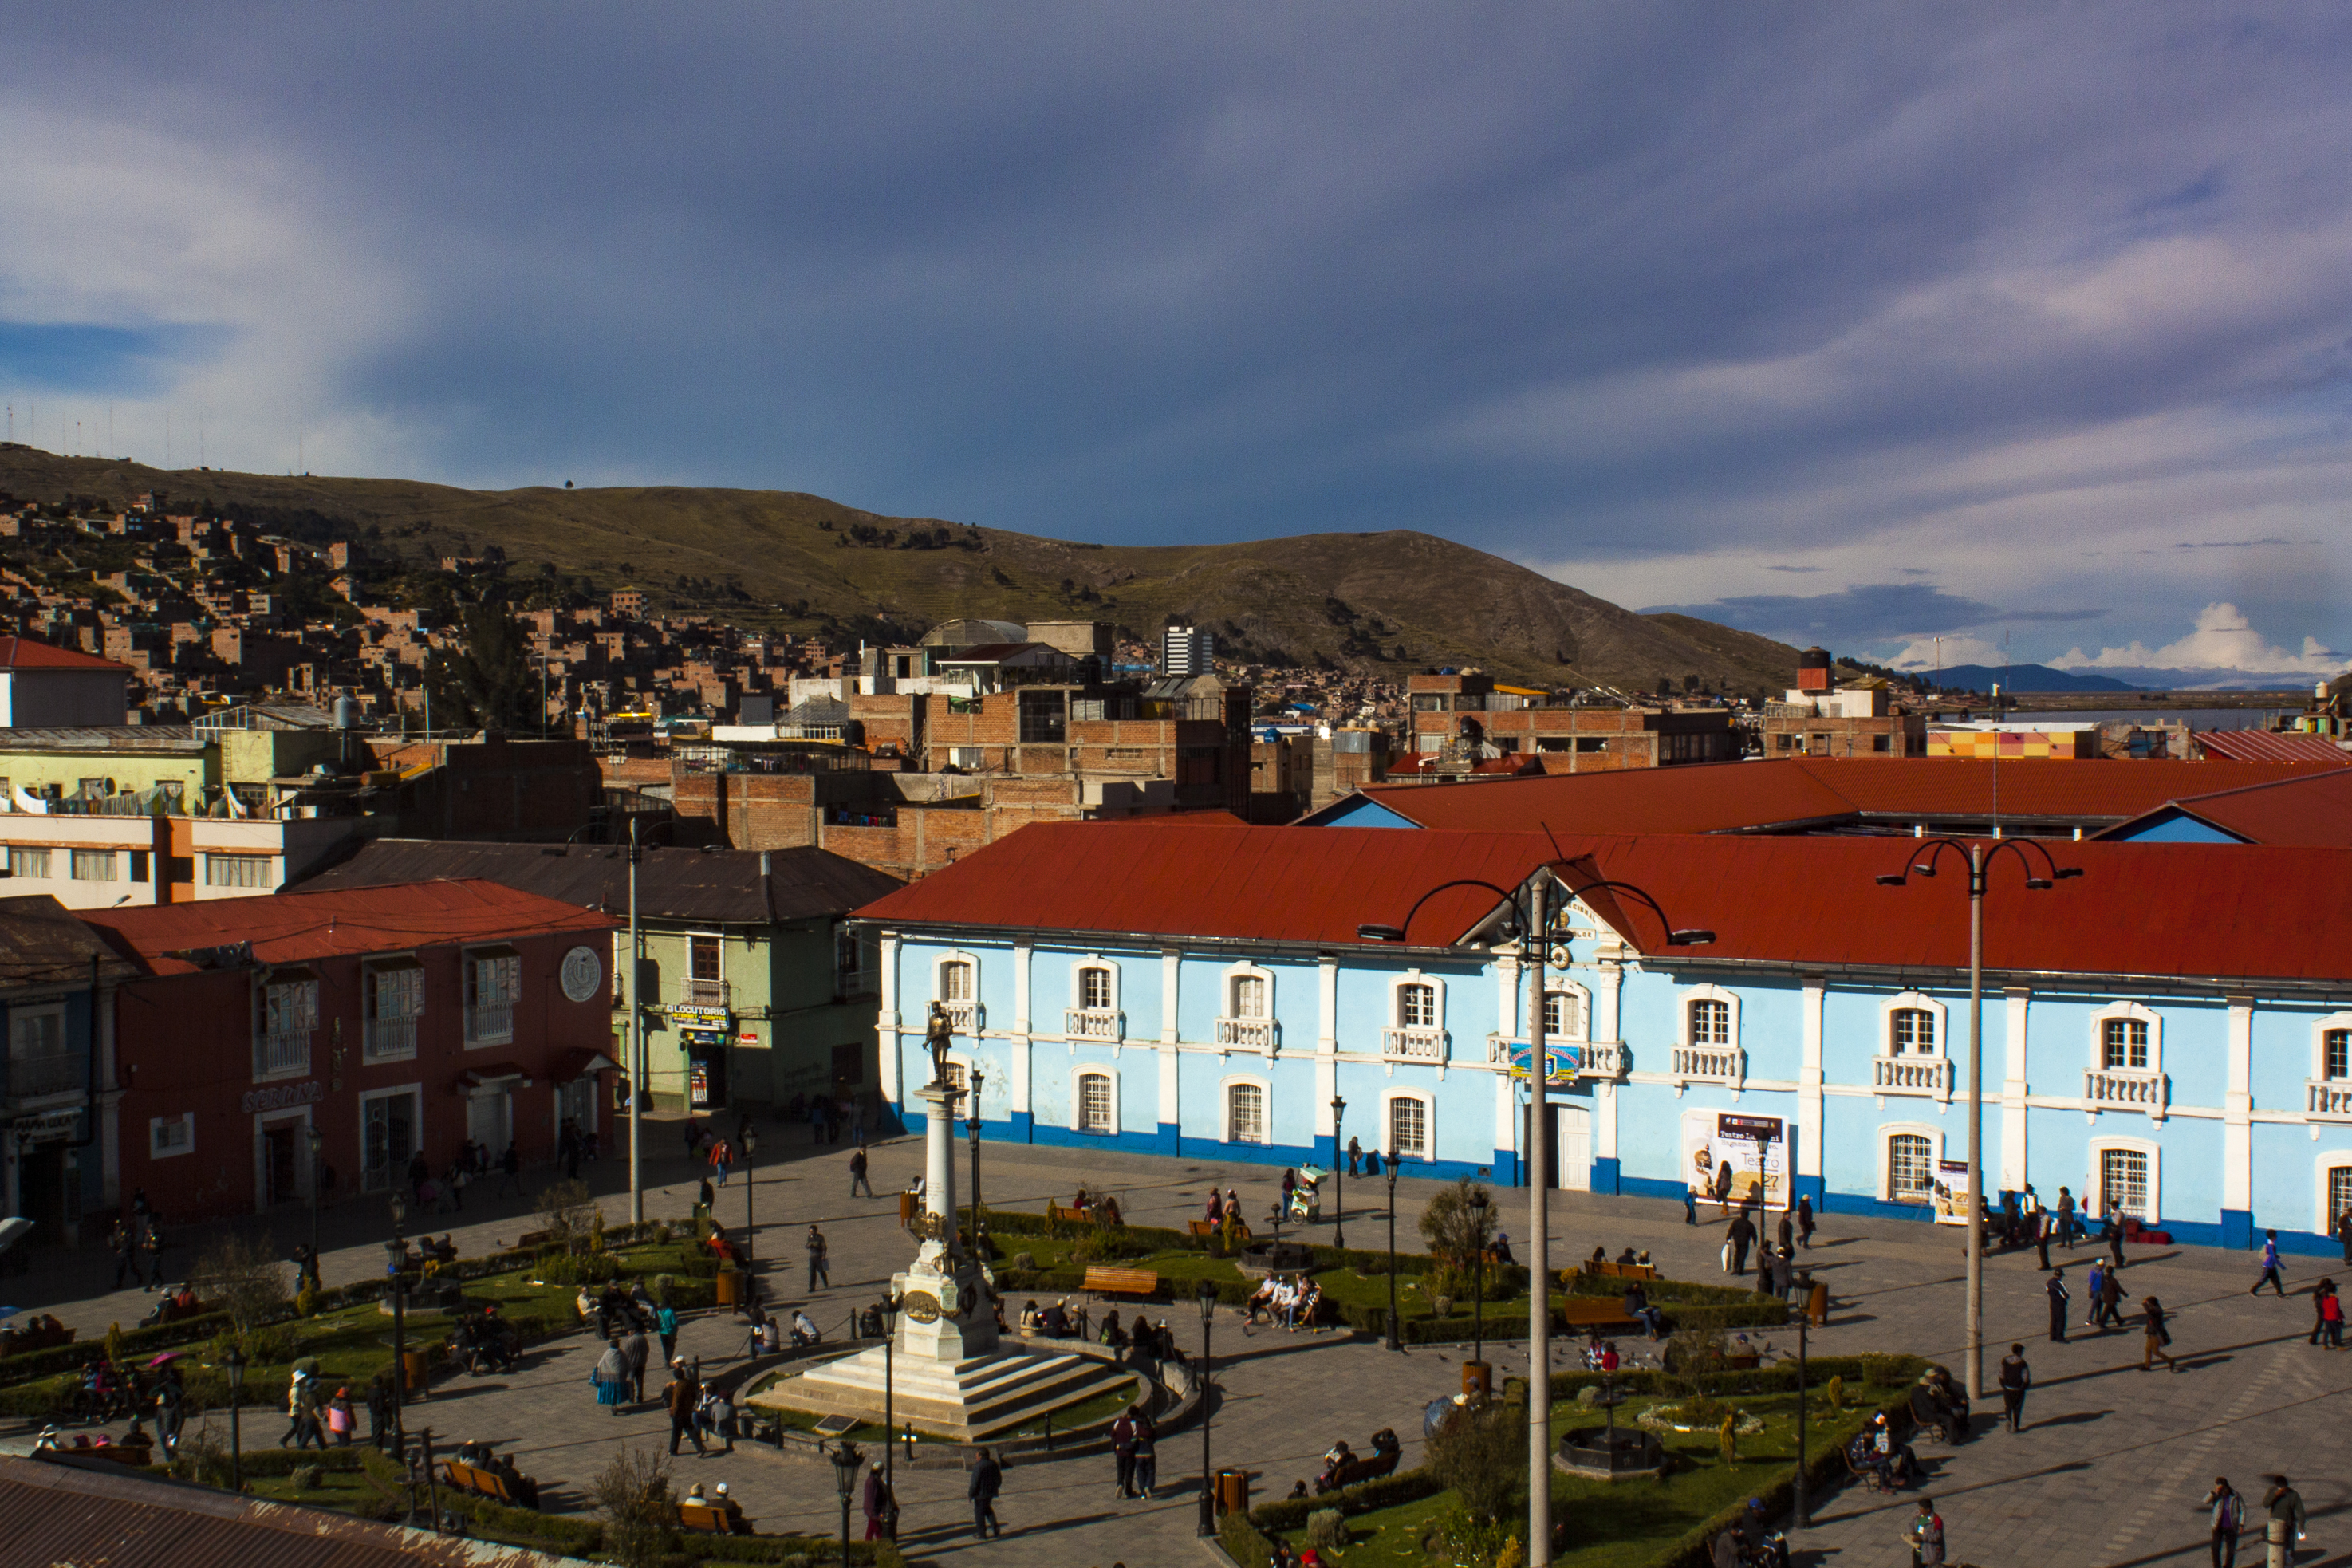 View of the Pino Plaza by the Titicaca Lake Puno City, Puno Providence, Peru